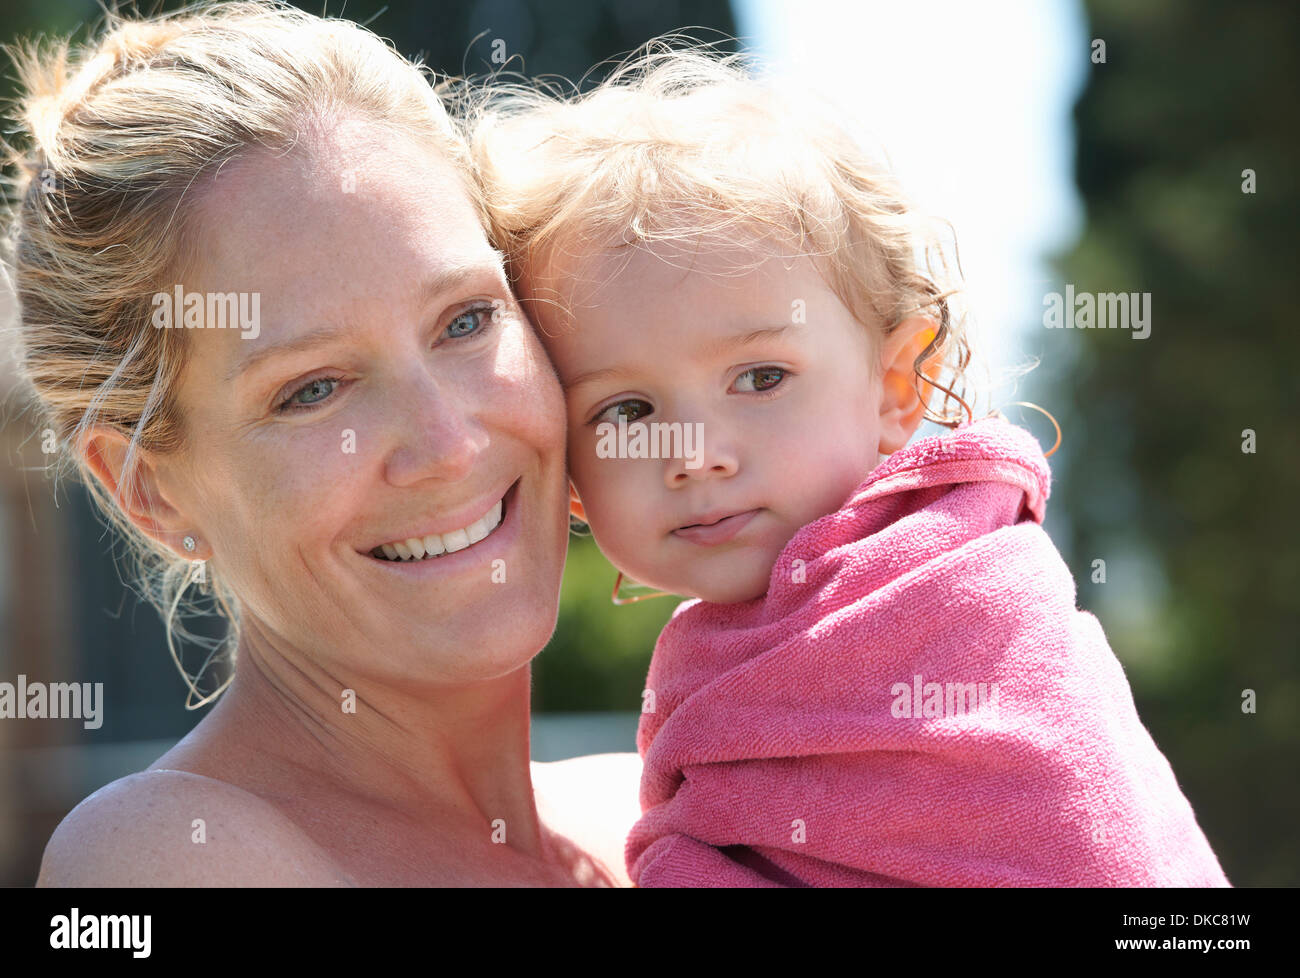 Madre sosteniendo niño envuelto en toalla Foto de stock